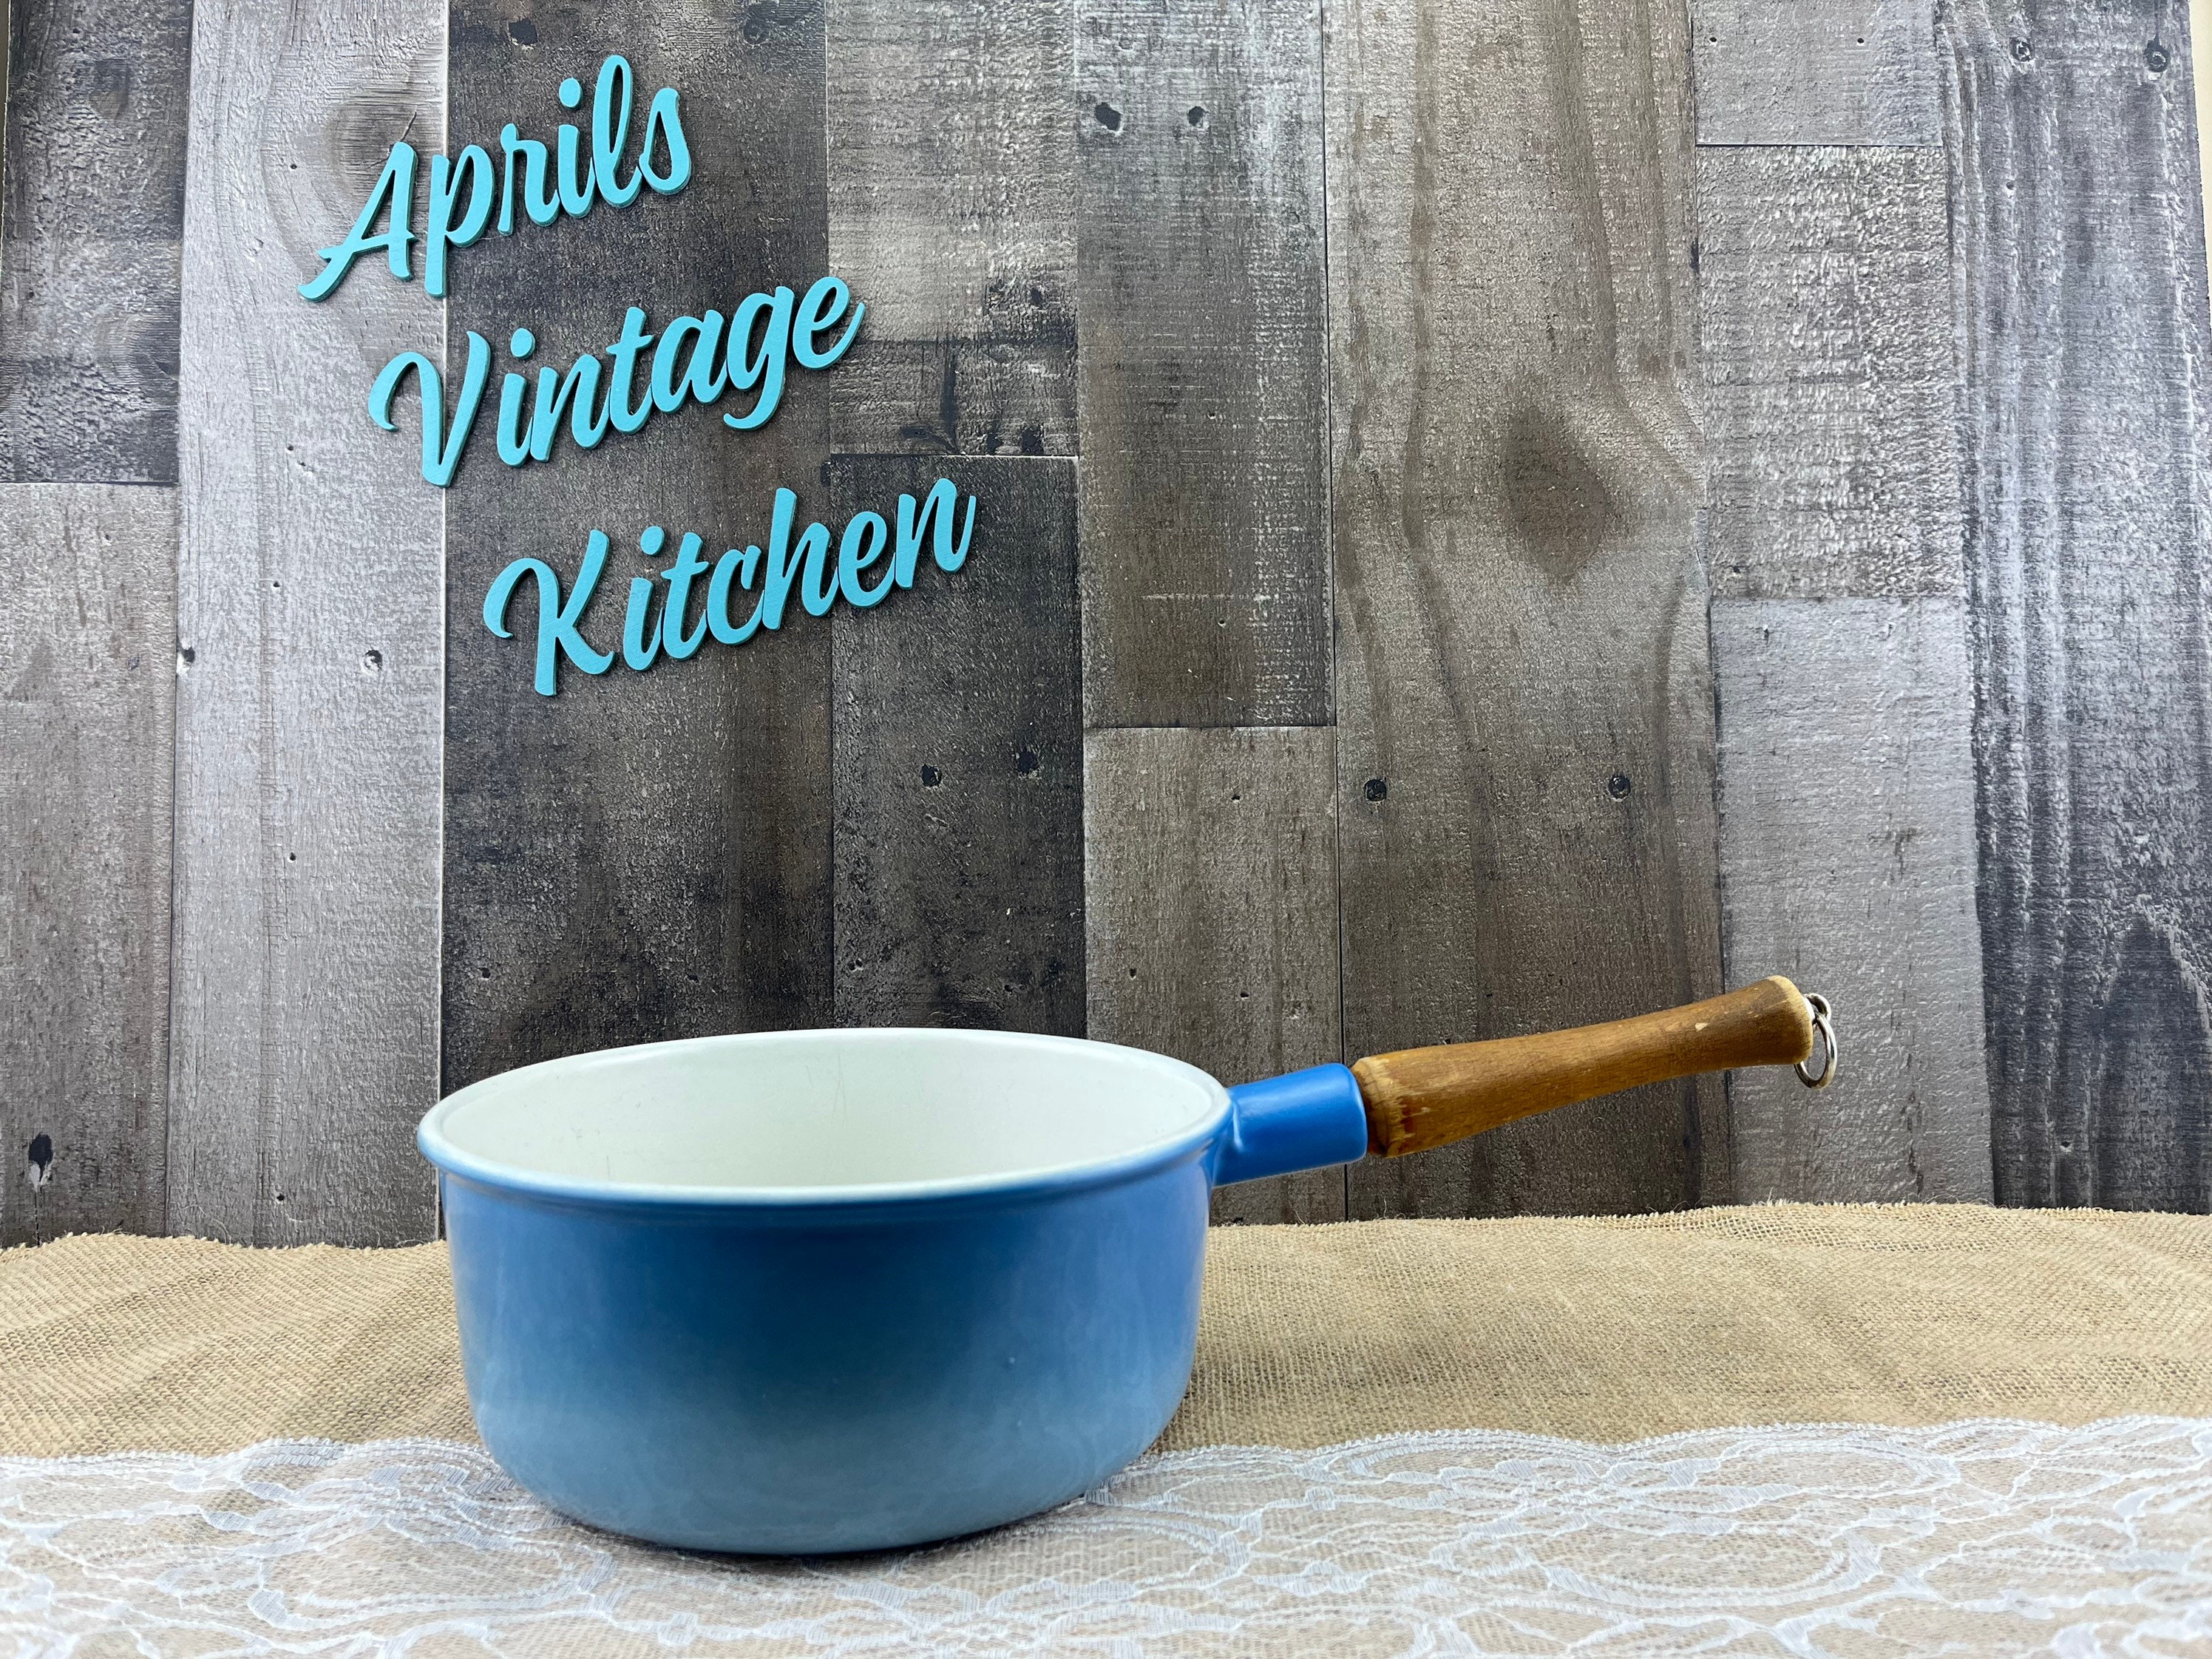 Julia Child Omelette Pan : r/vintagekitchentoys